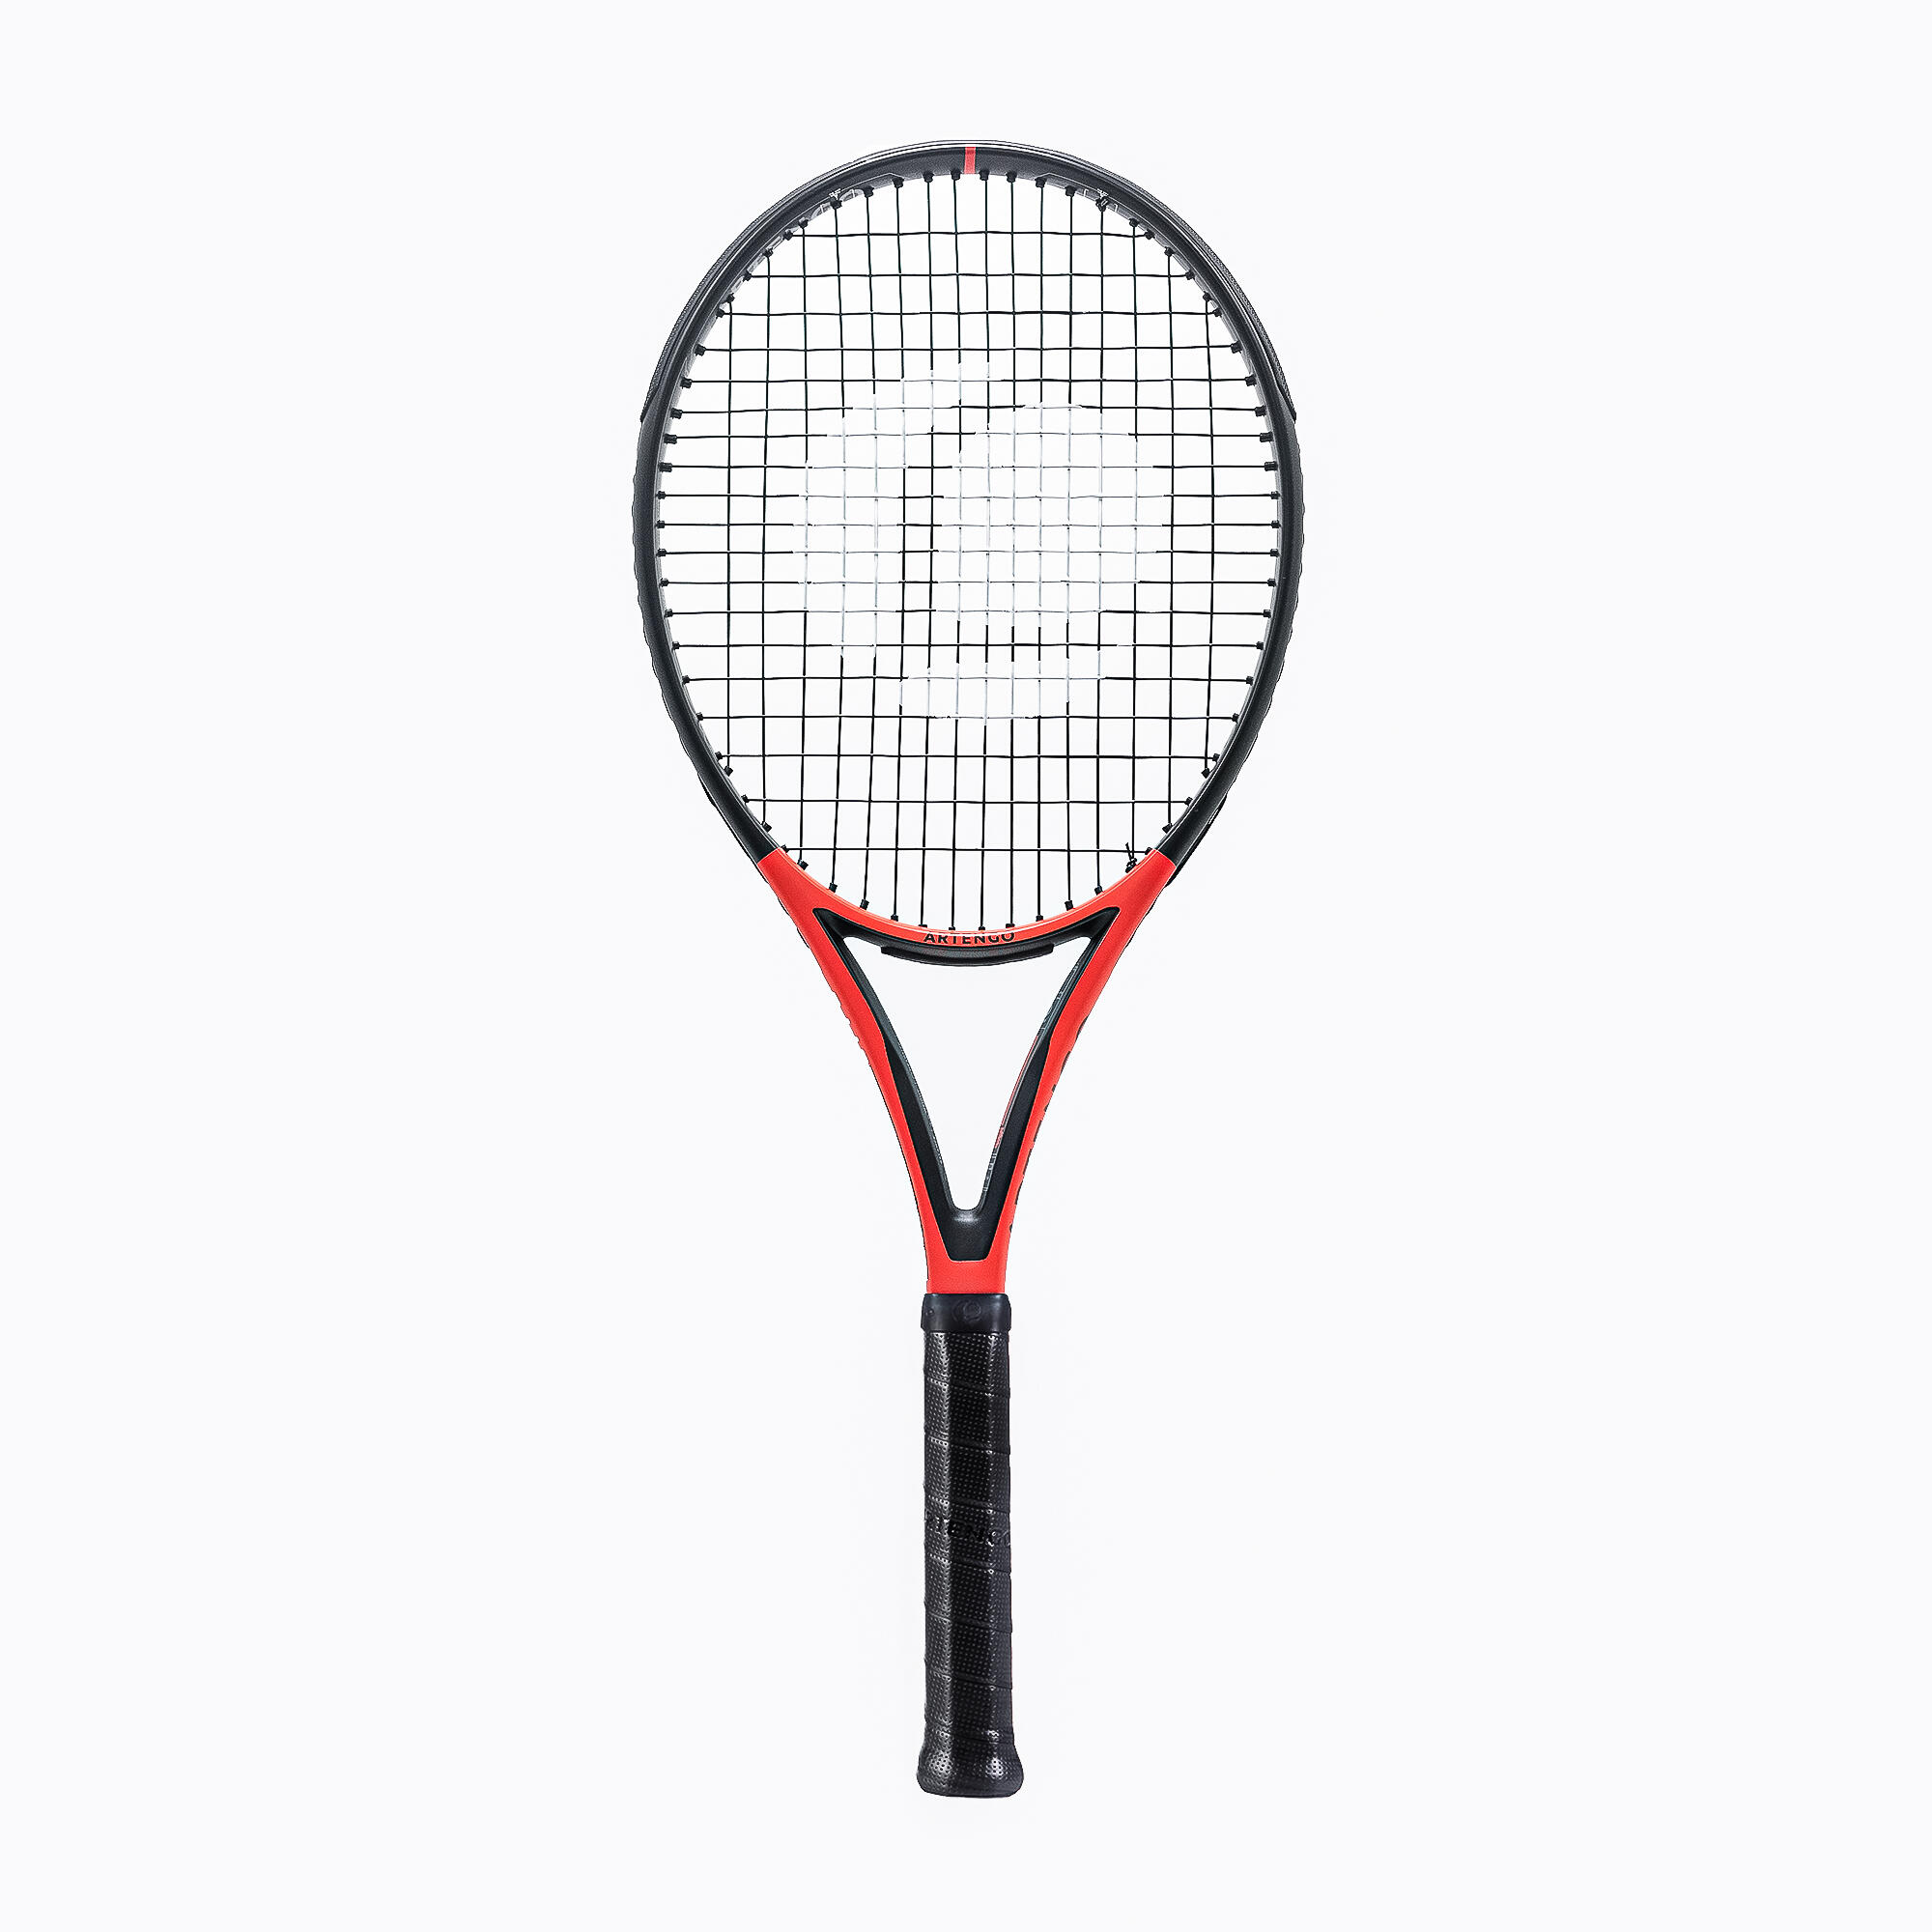 Rachetă Tenis TR990 Power Pro+ 300g Roșu-Negru Adulți decathlon.ro  Rachete de tenis